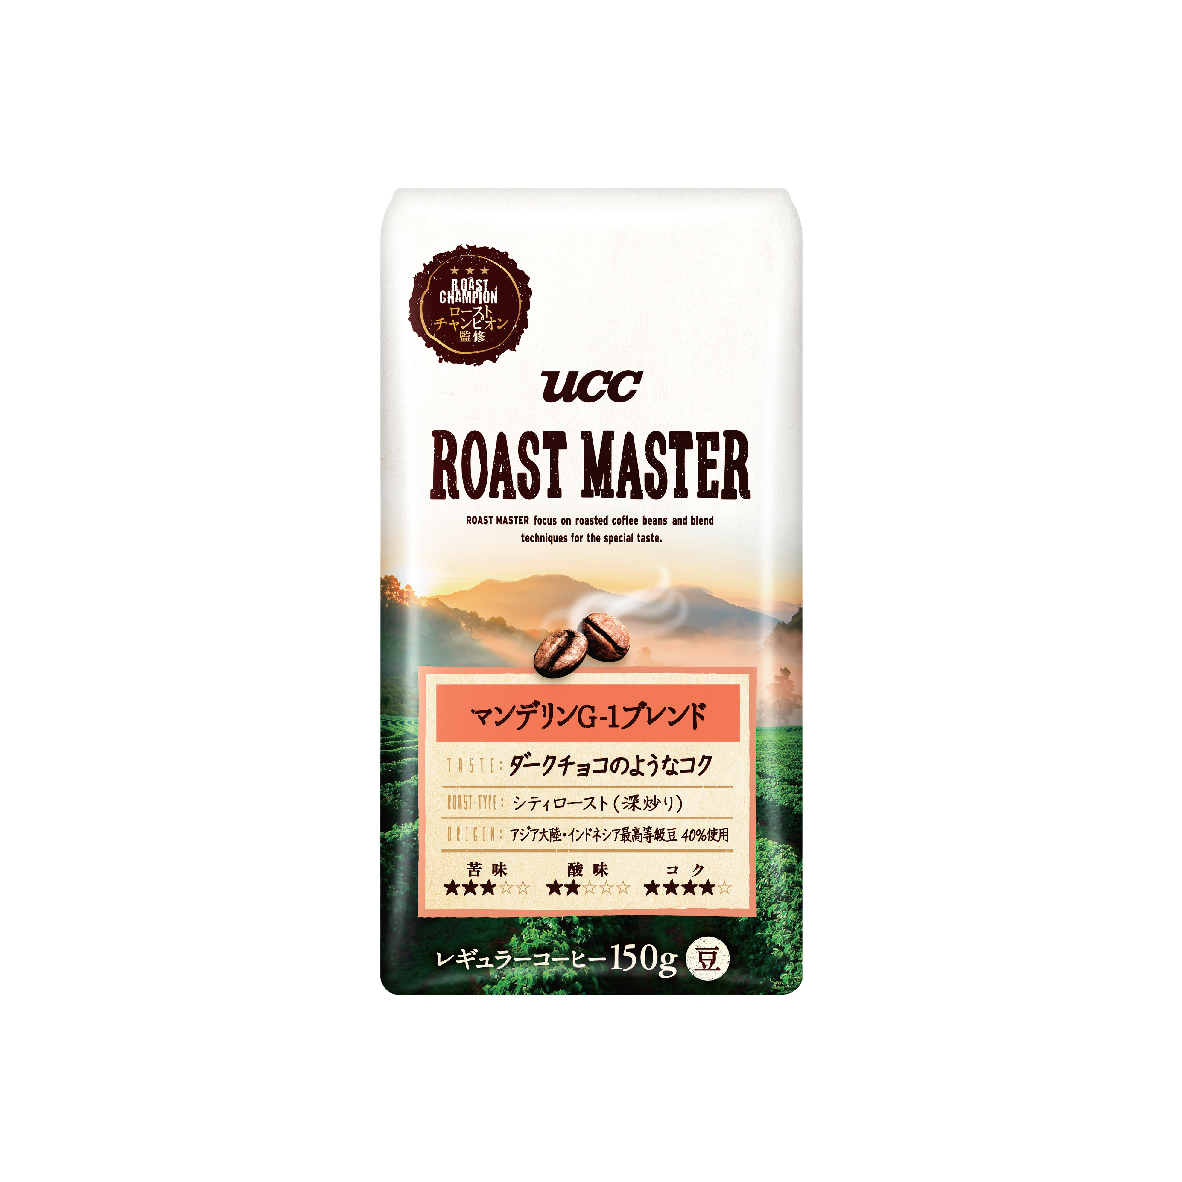 UCC Roast Master Mandolin G-1 Blend Roasted Coffee Beans